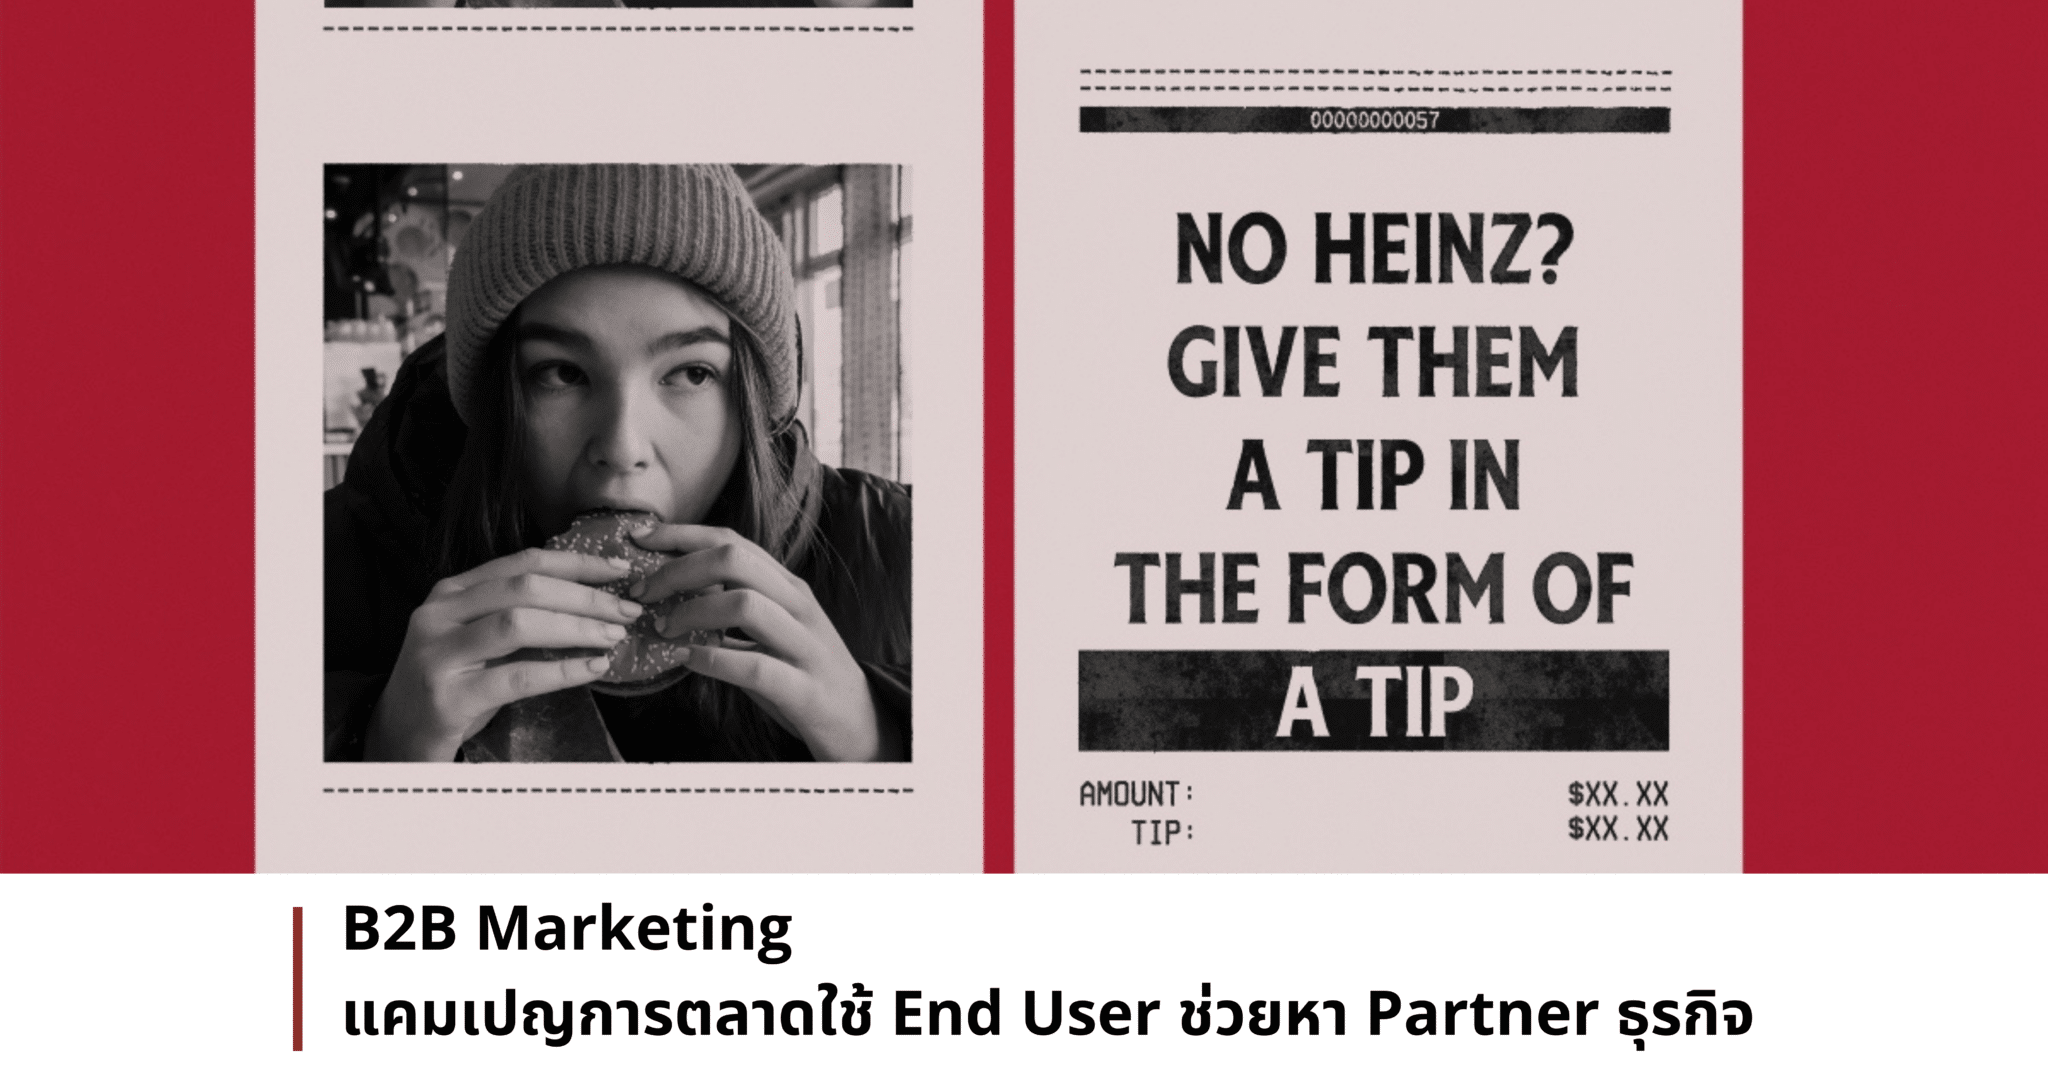 B2B Marketing แคมเปญการตลาดใช้ End User ช่วยหา Partner ธุรกิจ